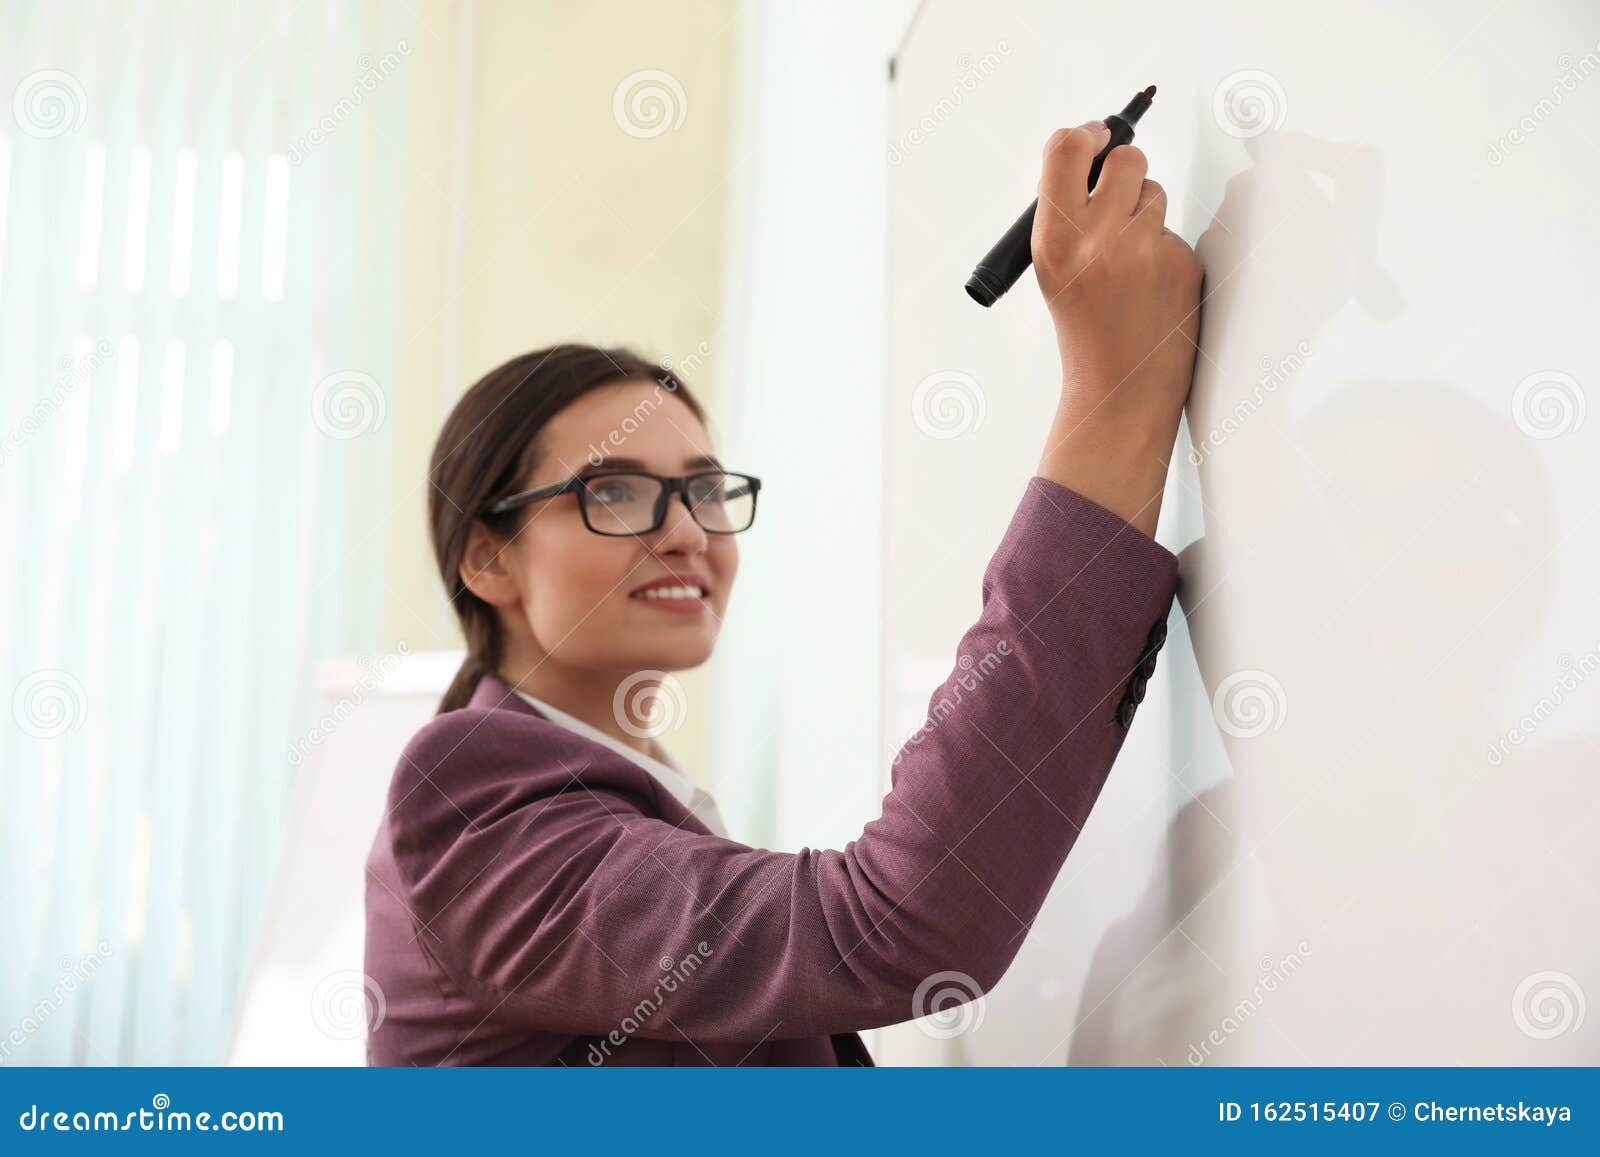 Female Teacher Writing On Whiteboard Stock Image Image Of Caucasian Room 162515407